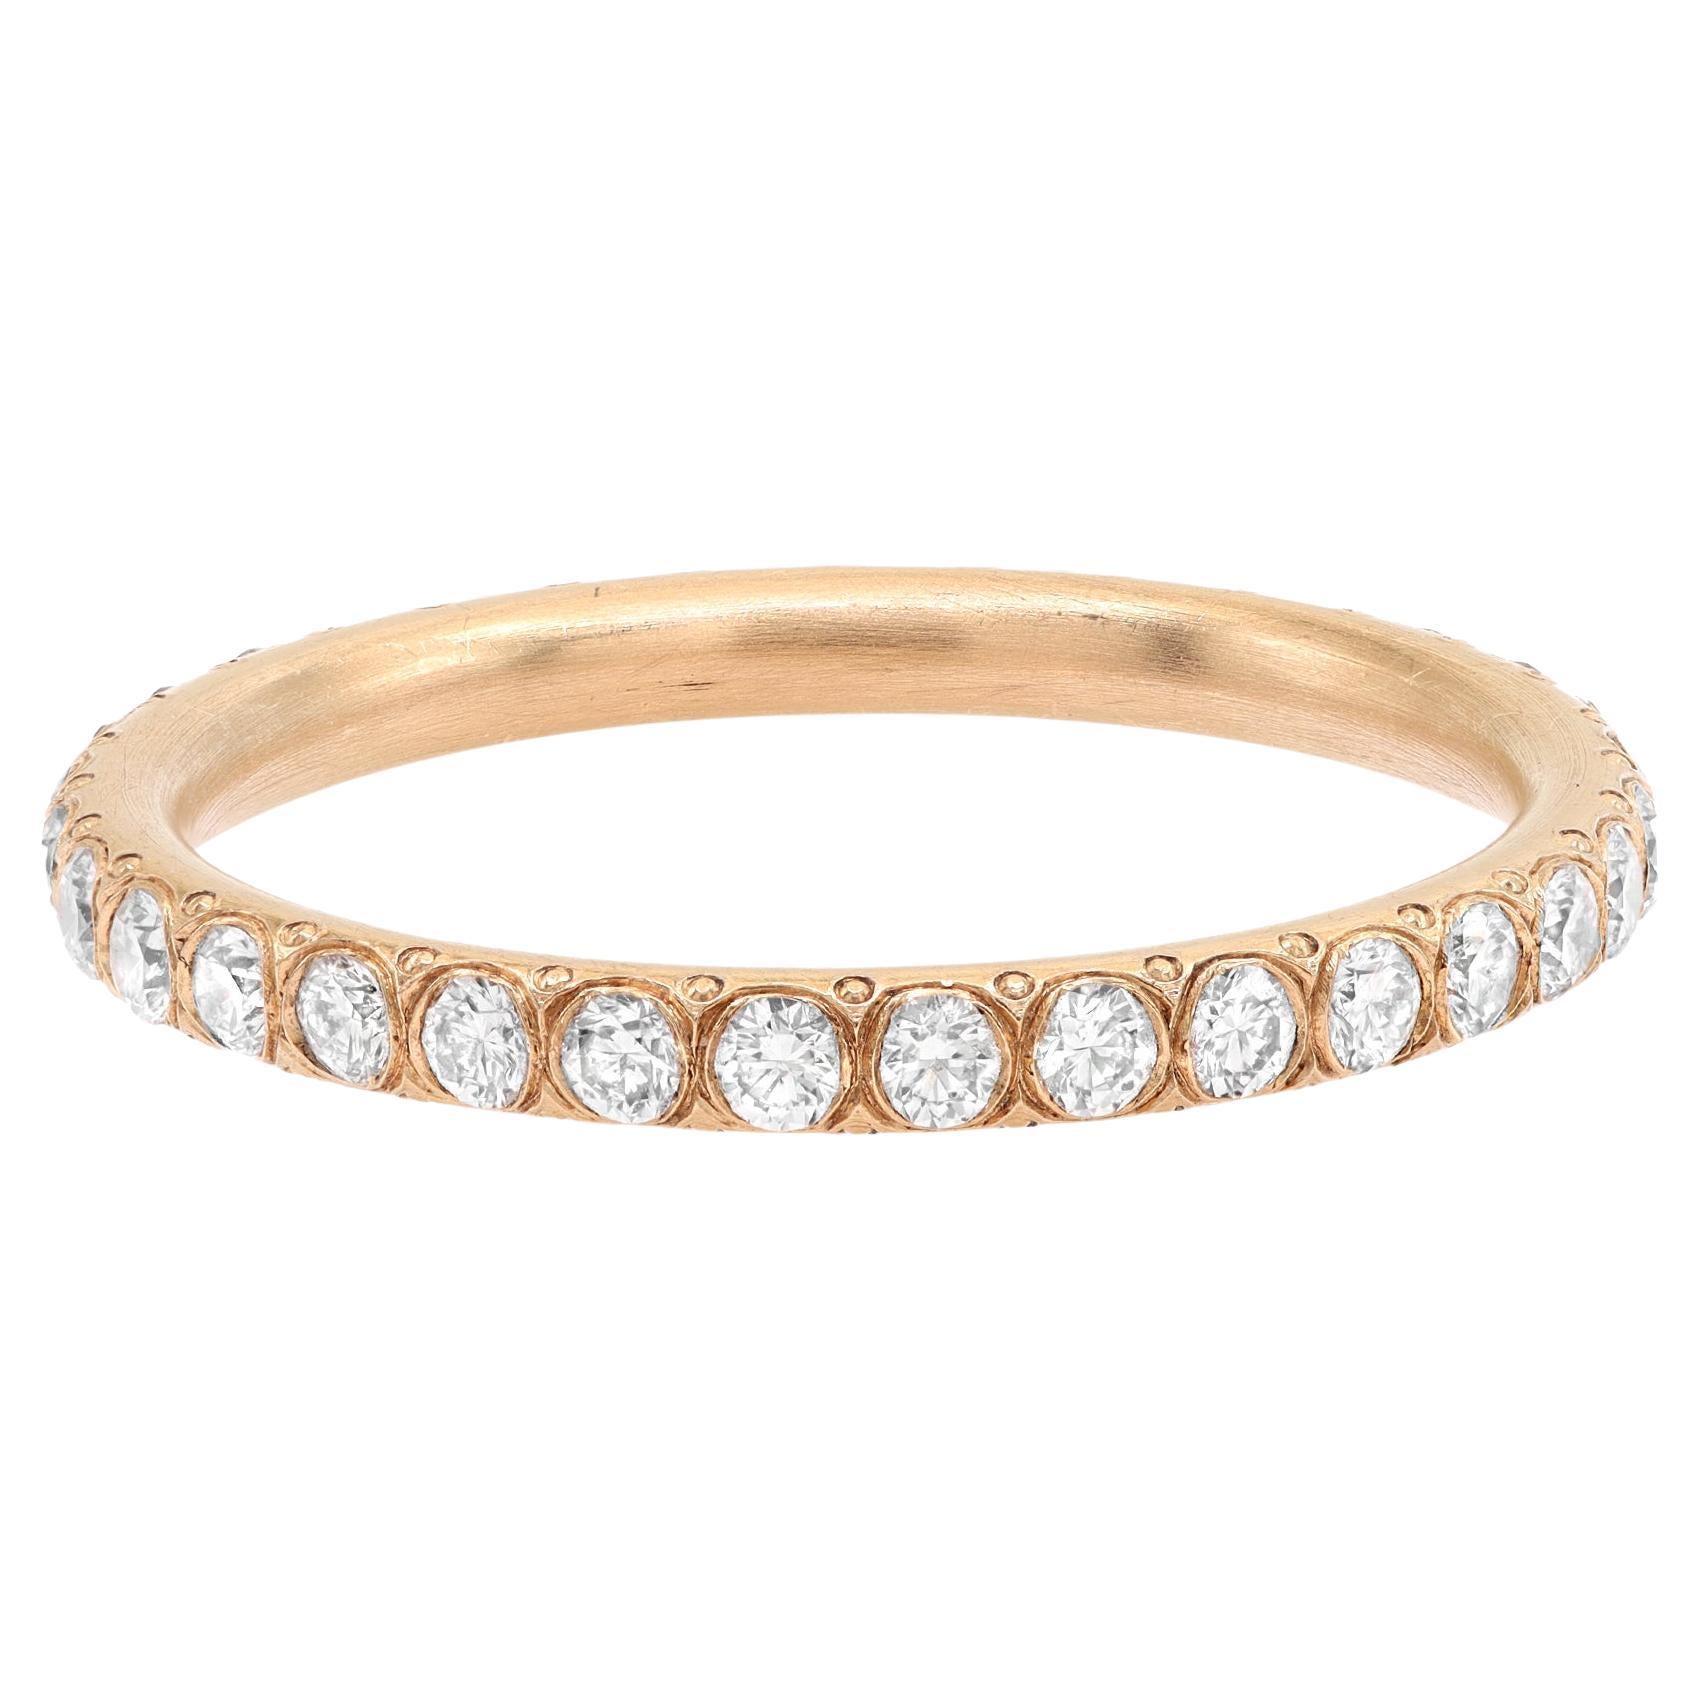 Art Deco Setting Diamond Eternity Band Ring 18K Rose Gold 0.65Cttw Size 5.25